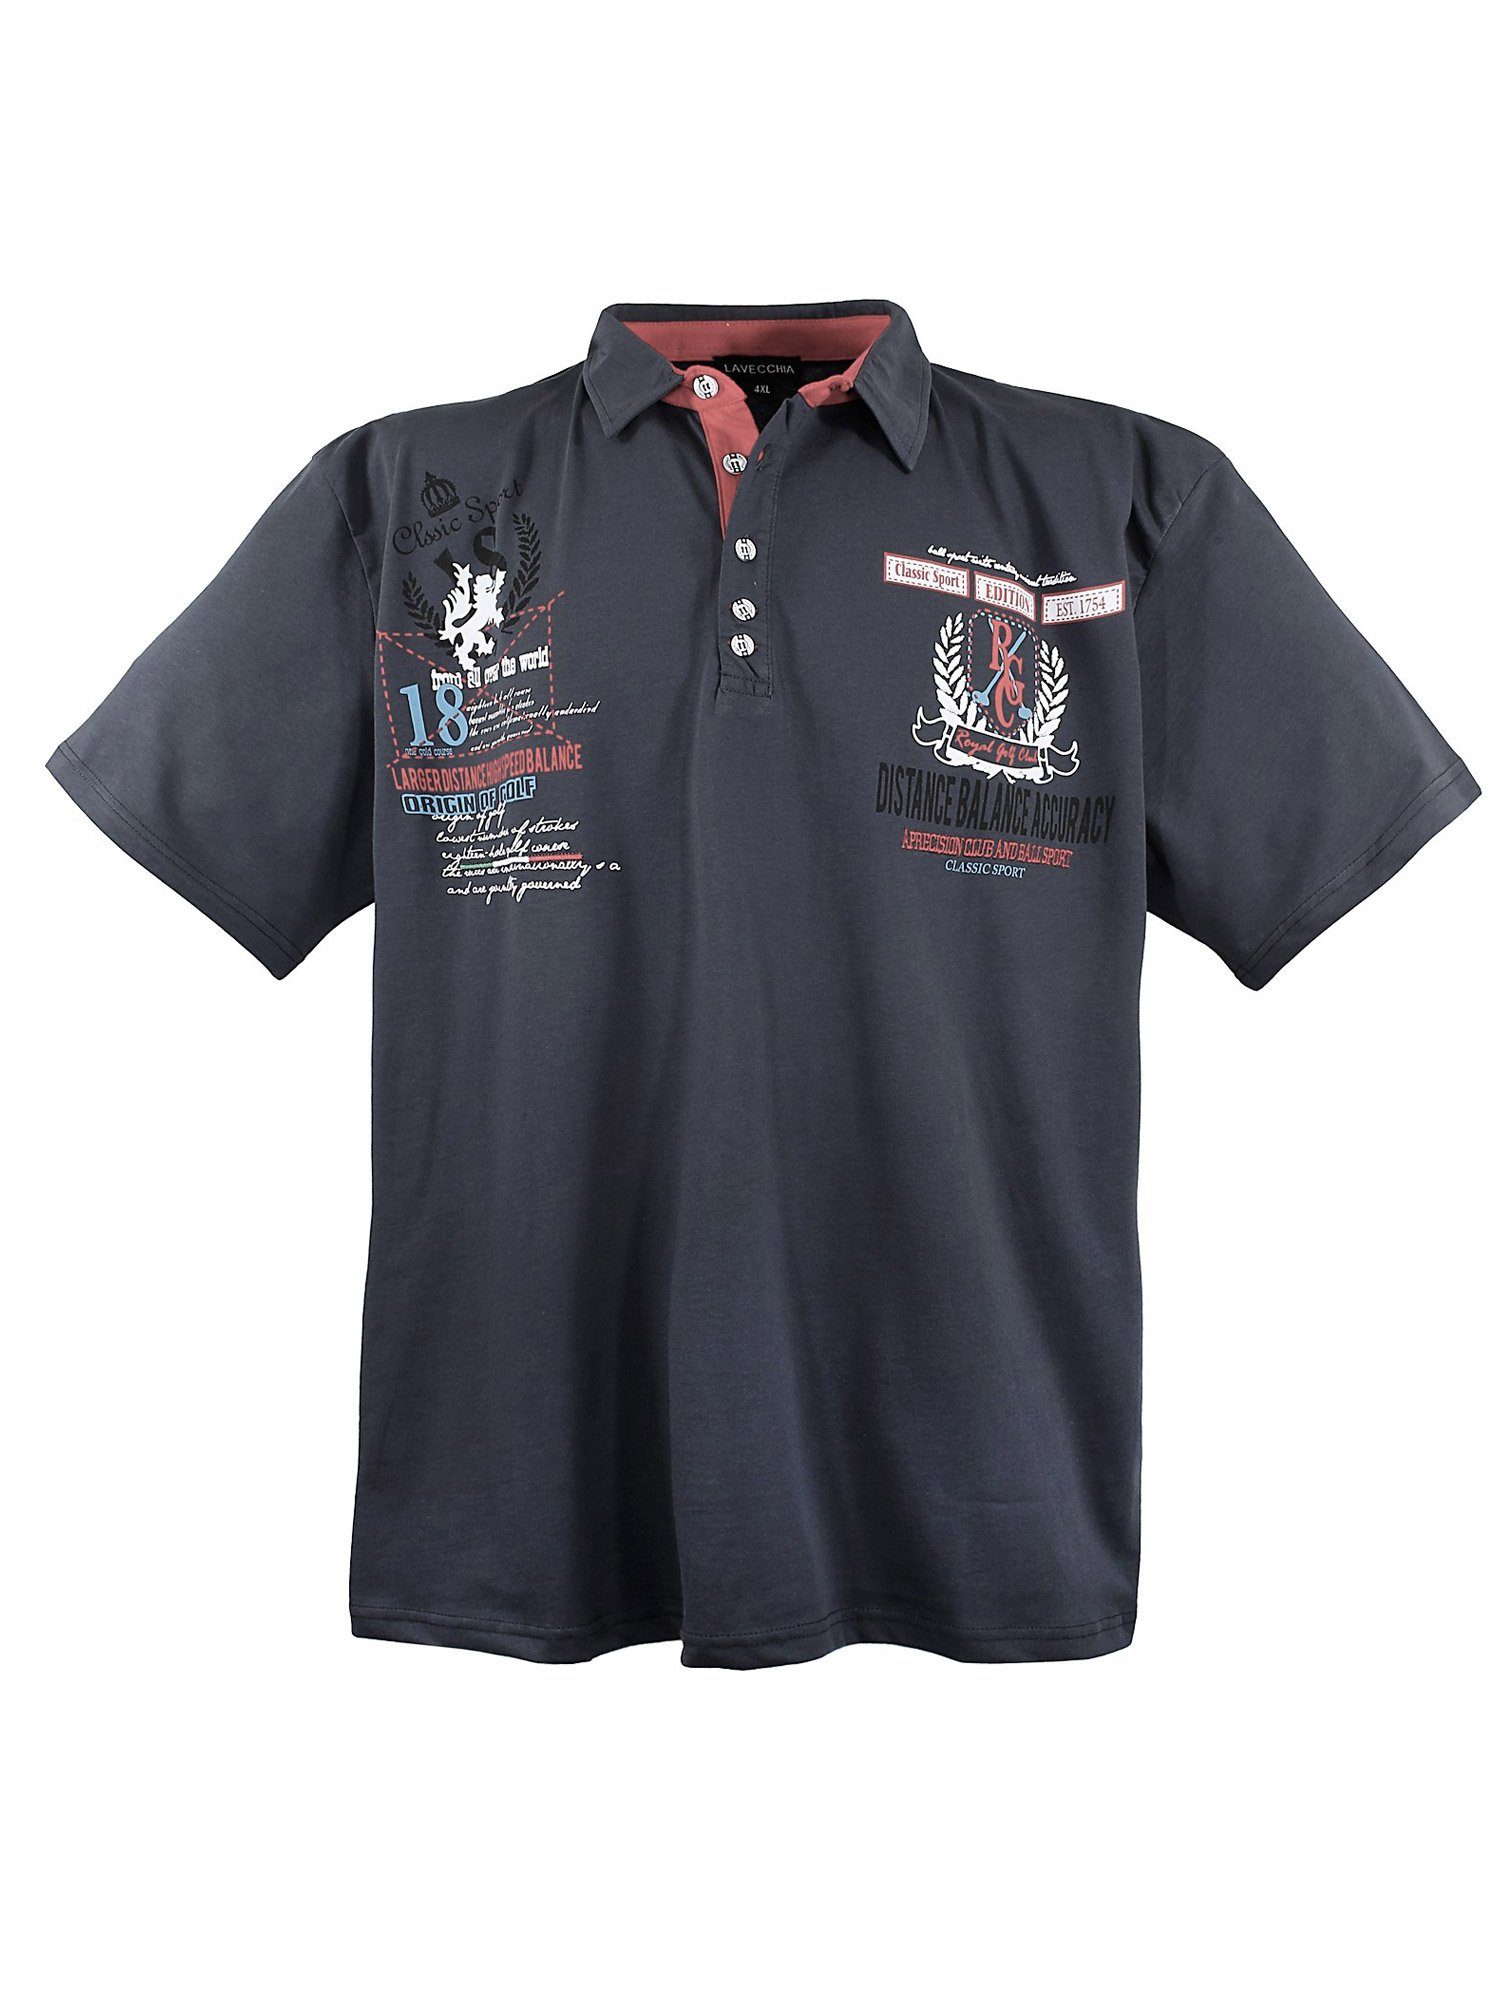 Lavecchia Poloshirt Übergrößen Herren Shirt Polo Polo LV-2038 anthrazit Shirt Herren